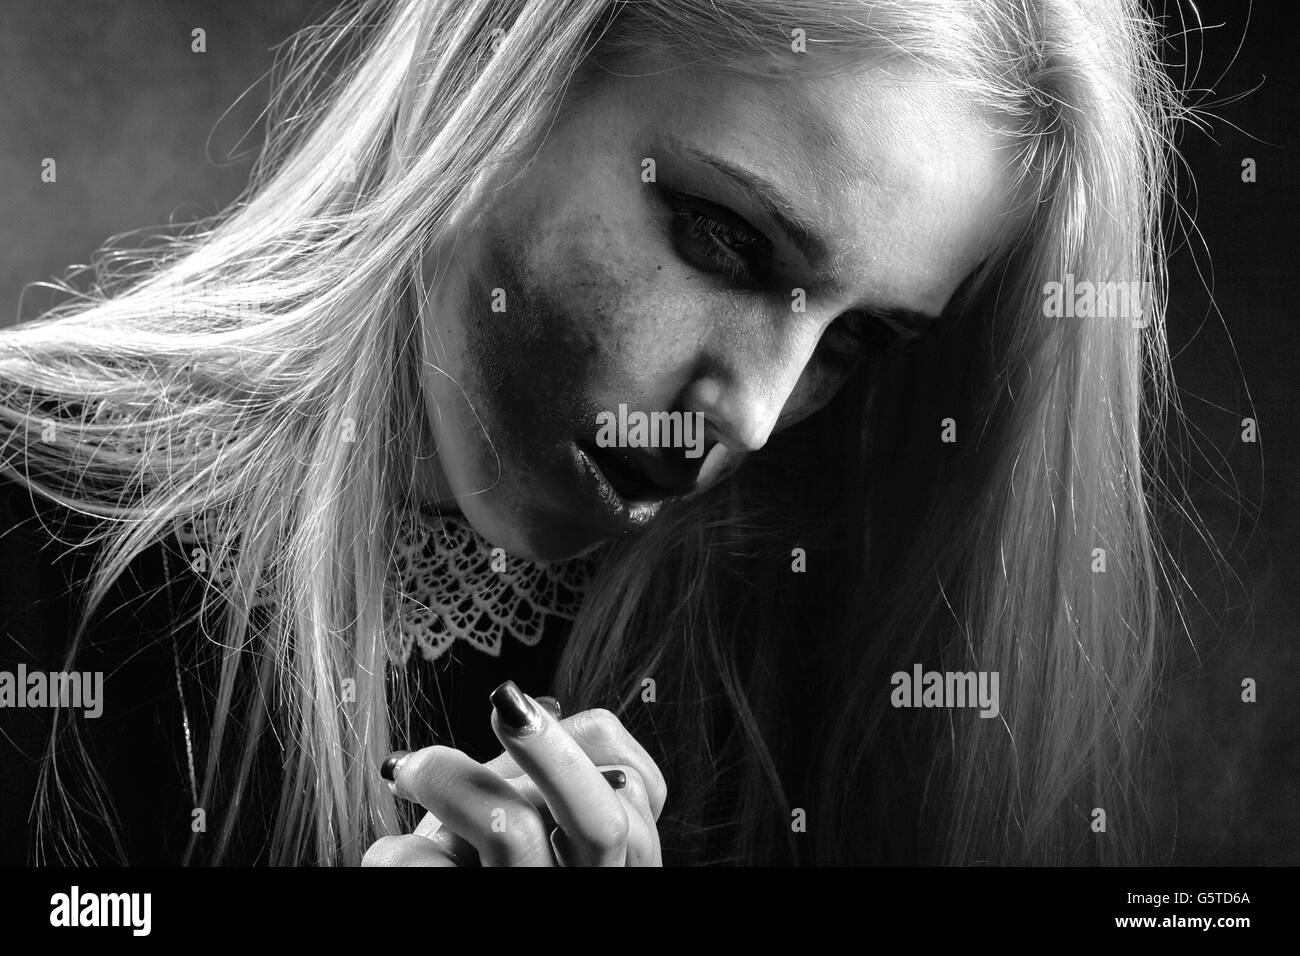 sad pensive girl with smeared cosmetics on black background, monochrome Stock Photo